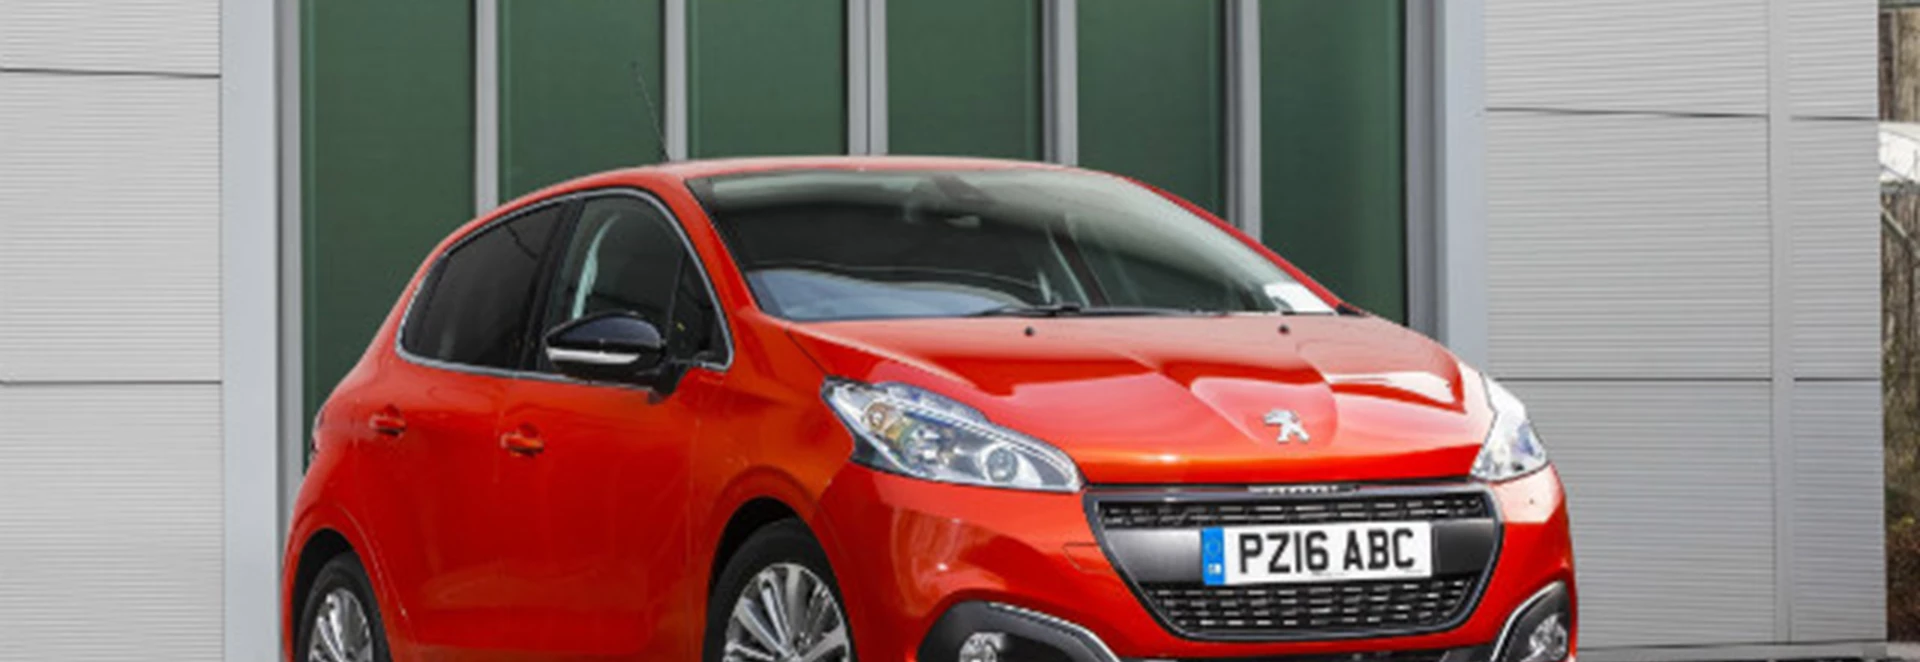 Peugeot Just Add Fuel Explained Car Keys